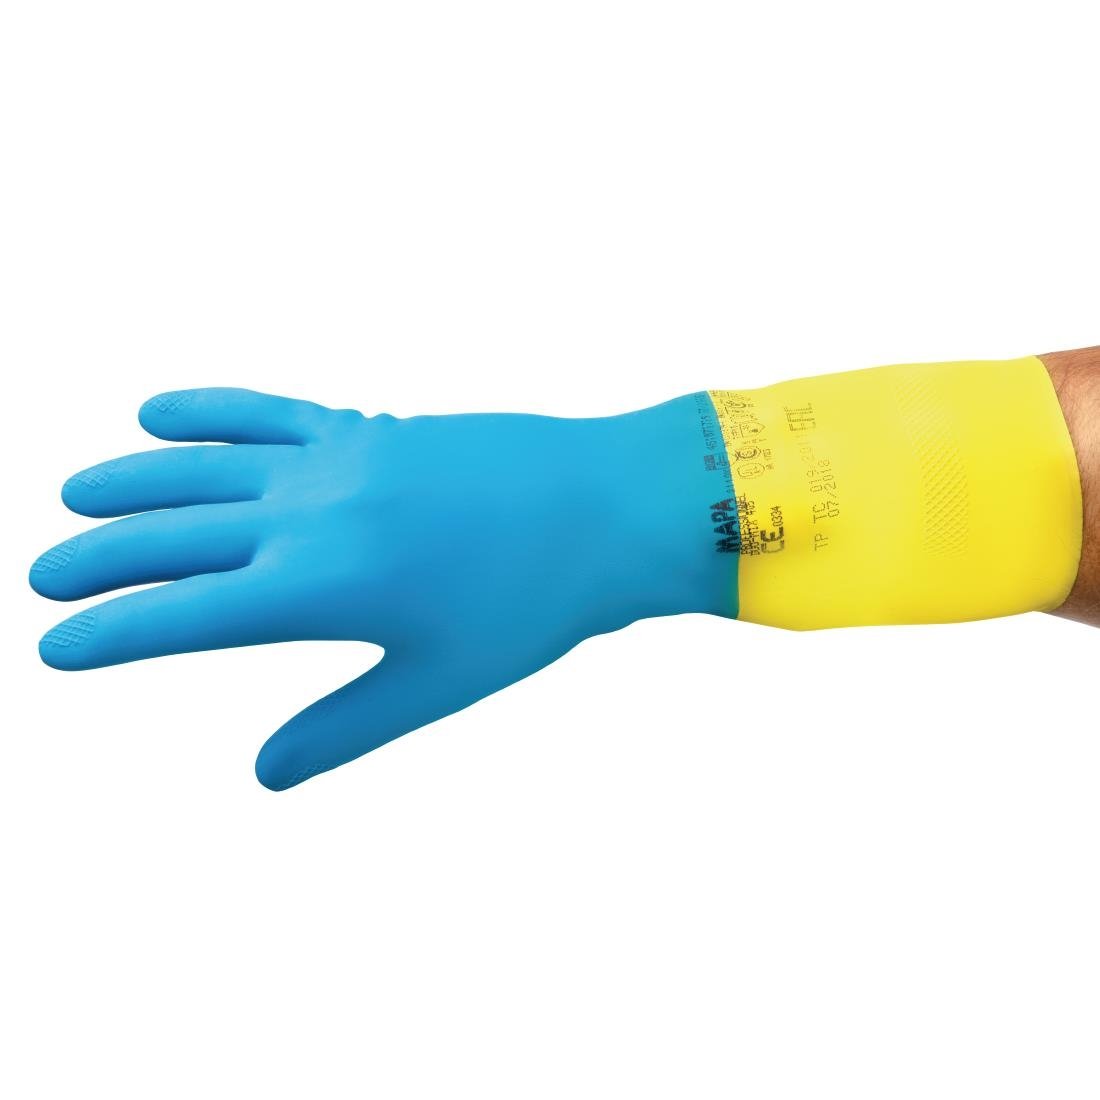 FA296-XL MAPA Alto 405 Liquid-Proof Heavy-Duty Janitorial Gloves Blue and Yellow Extra Large